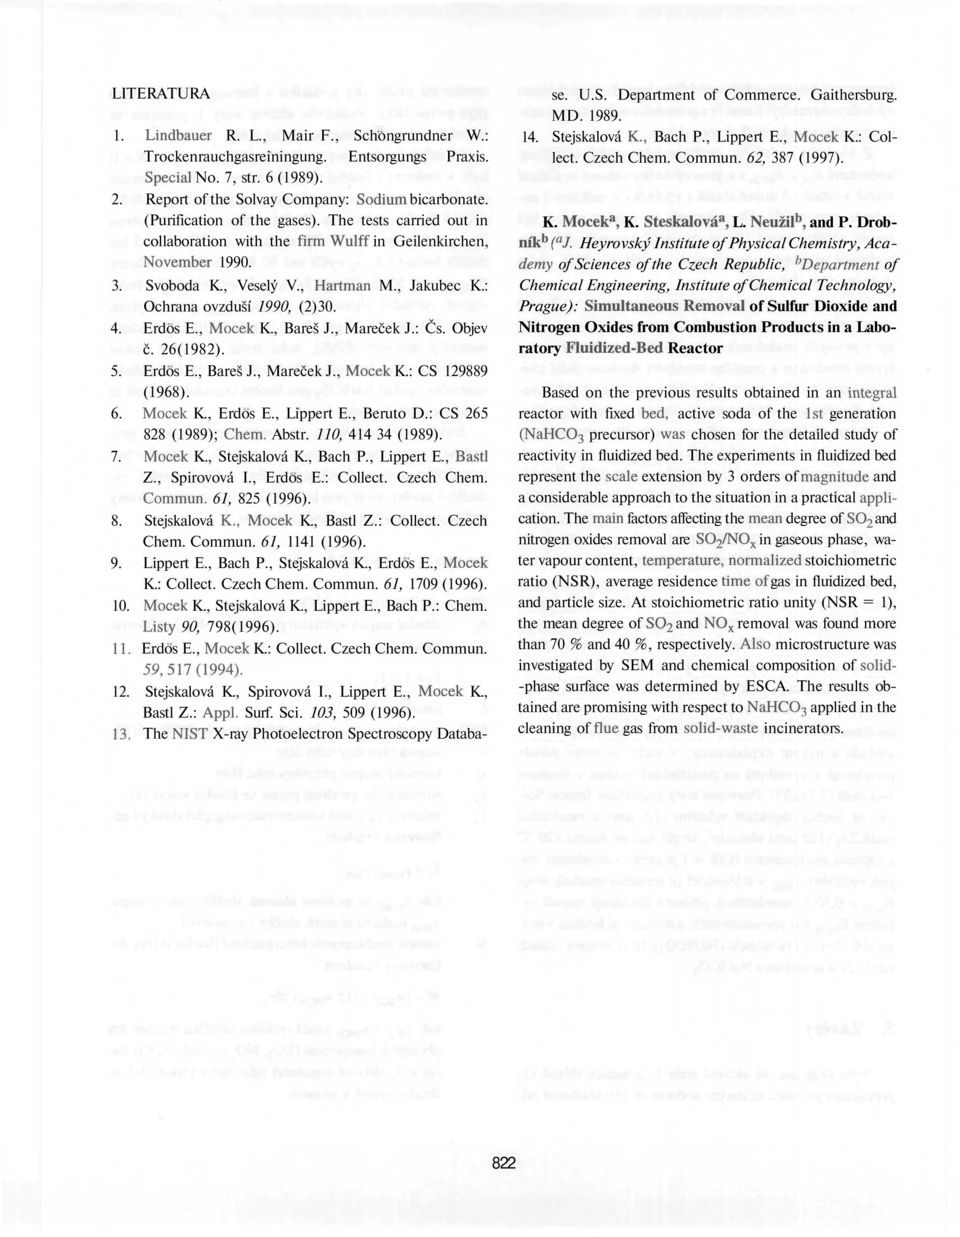 4. Erdos E., Moček K., Bareš J., Mareček J.: Čs. bjev č. 26(1982). 5. Erdos E., Bareš J., Mareček J., Moček K.: CS 129889 (1968). 6. Moček K., Erdos E., Lippert E., Beruto D.: CS 265 828 (1989); Chem.